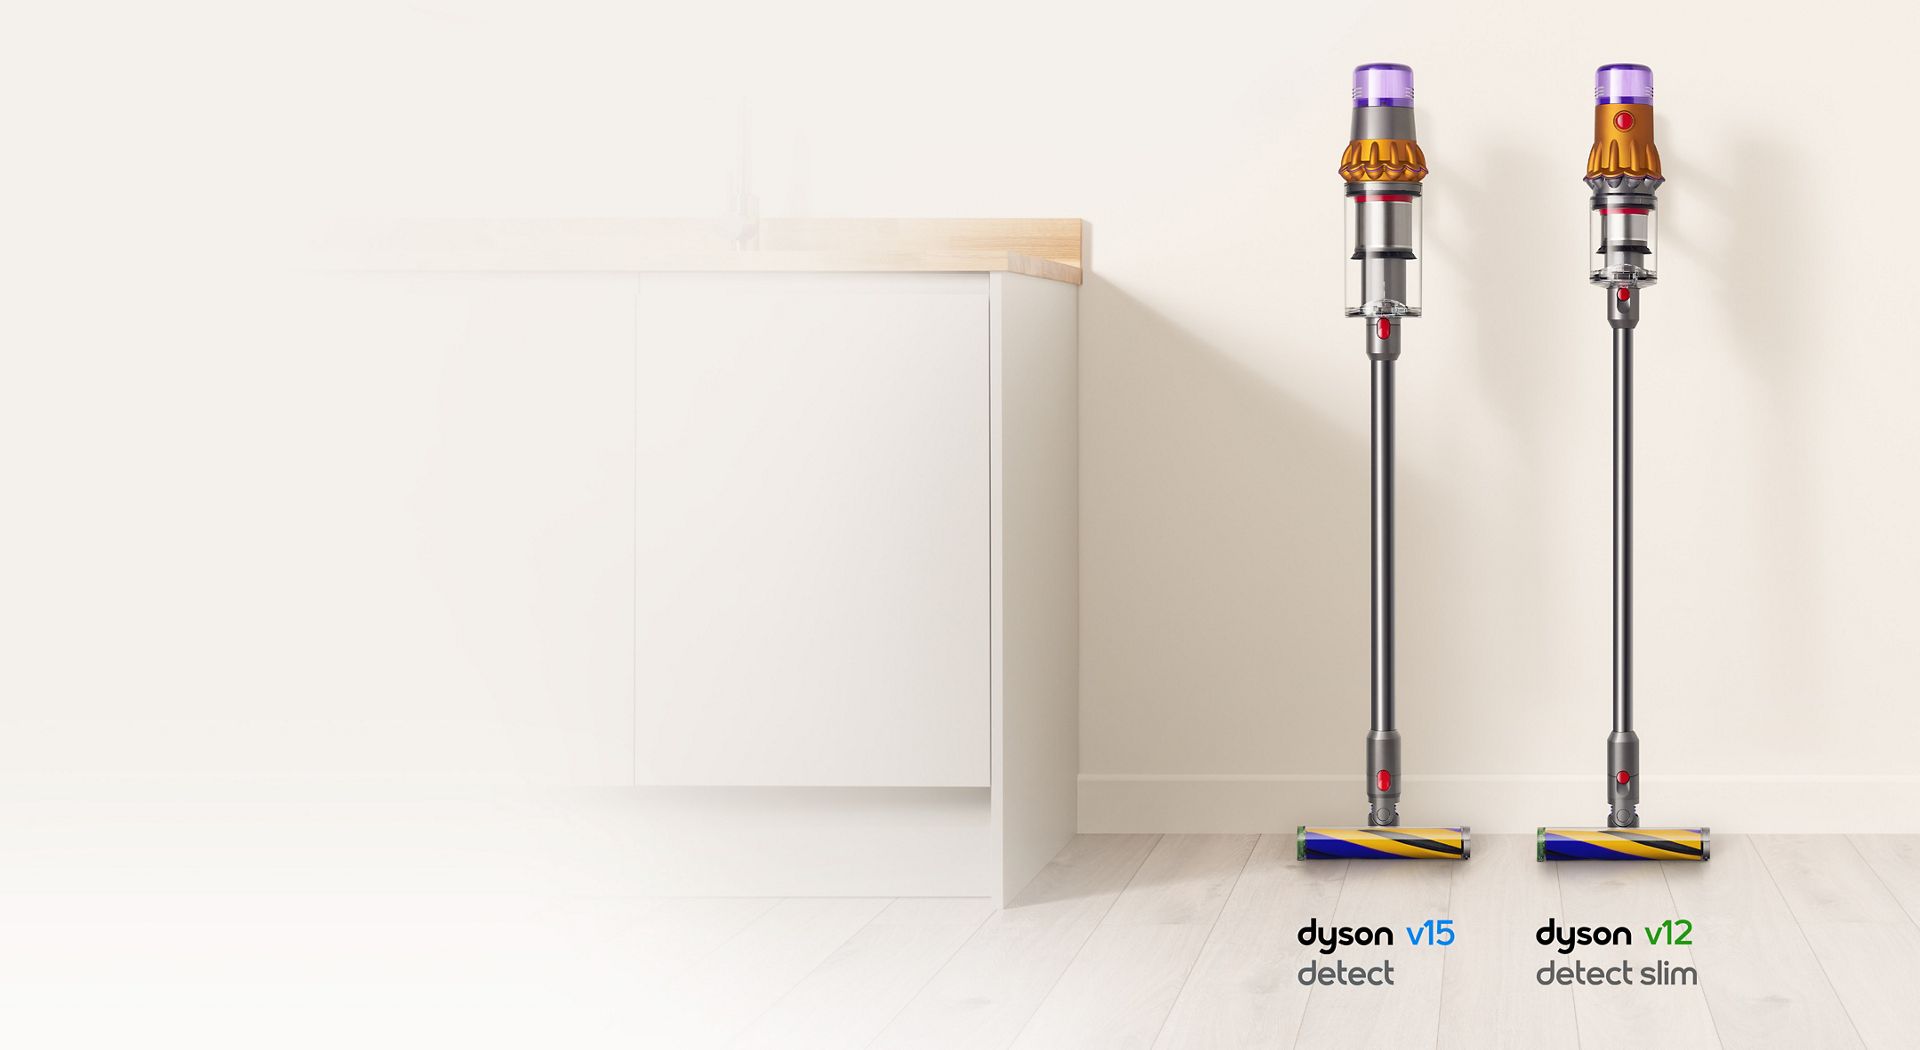 Dyson V12 and V15 cordless stick vacuums